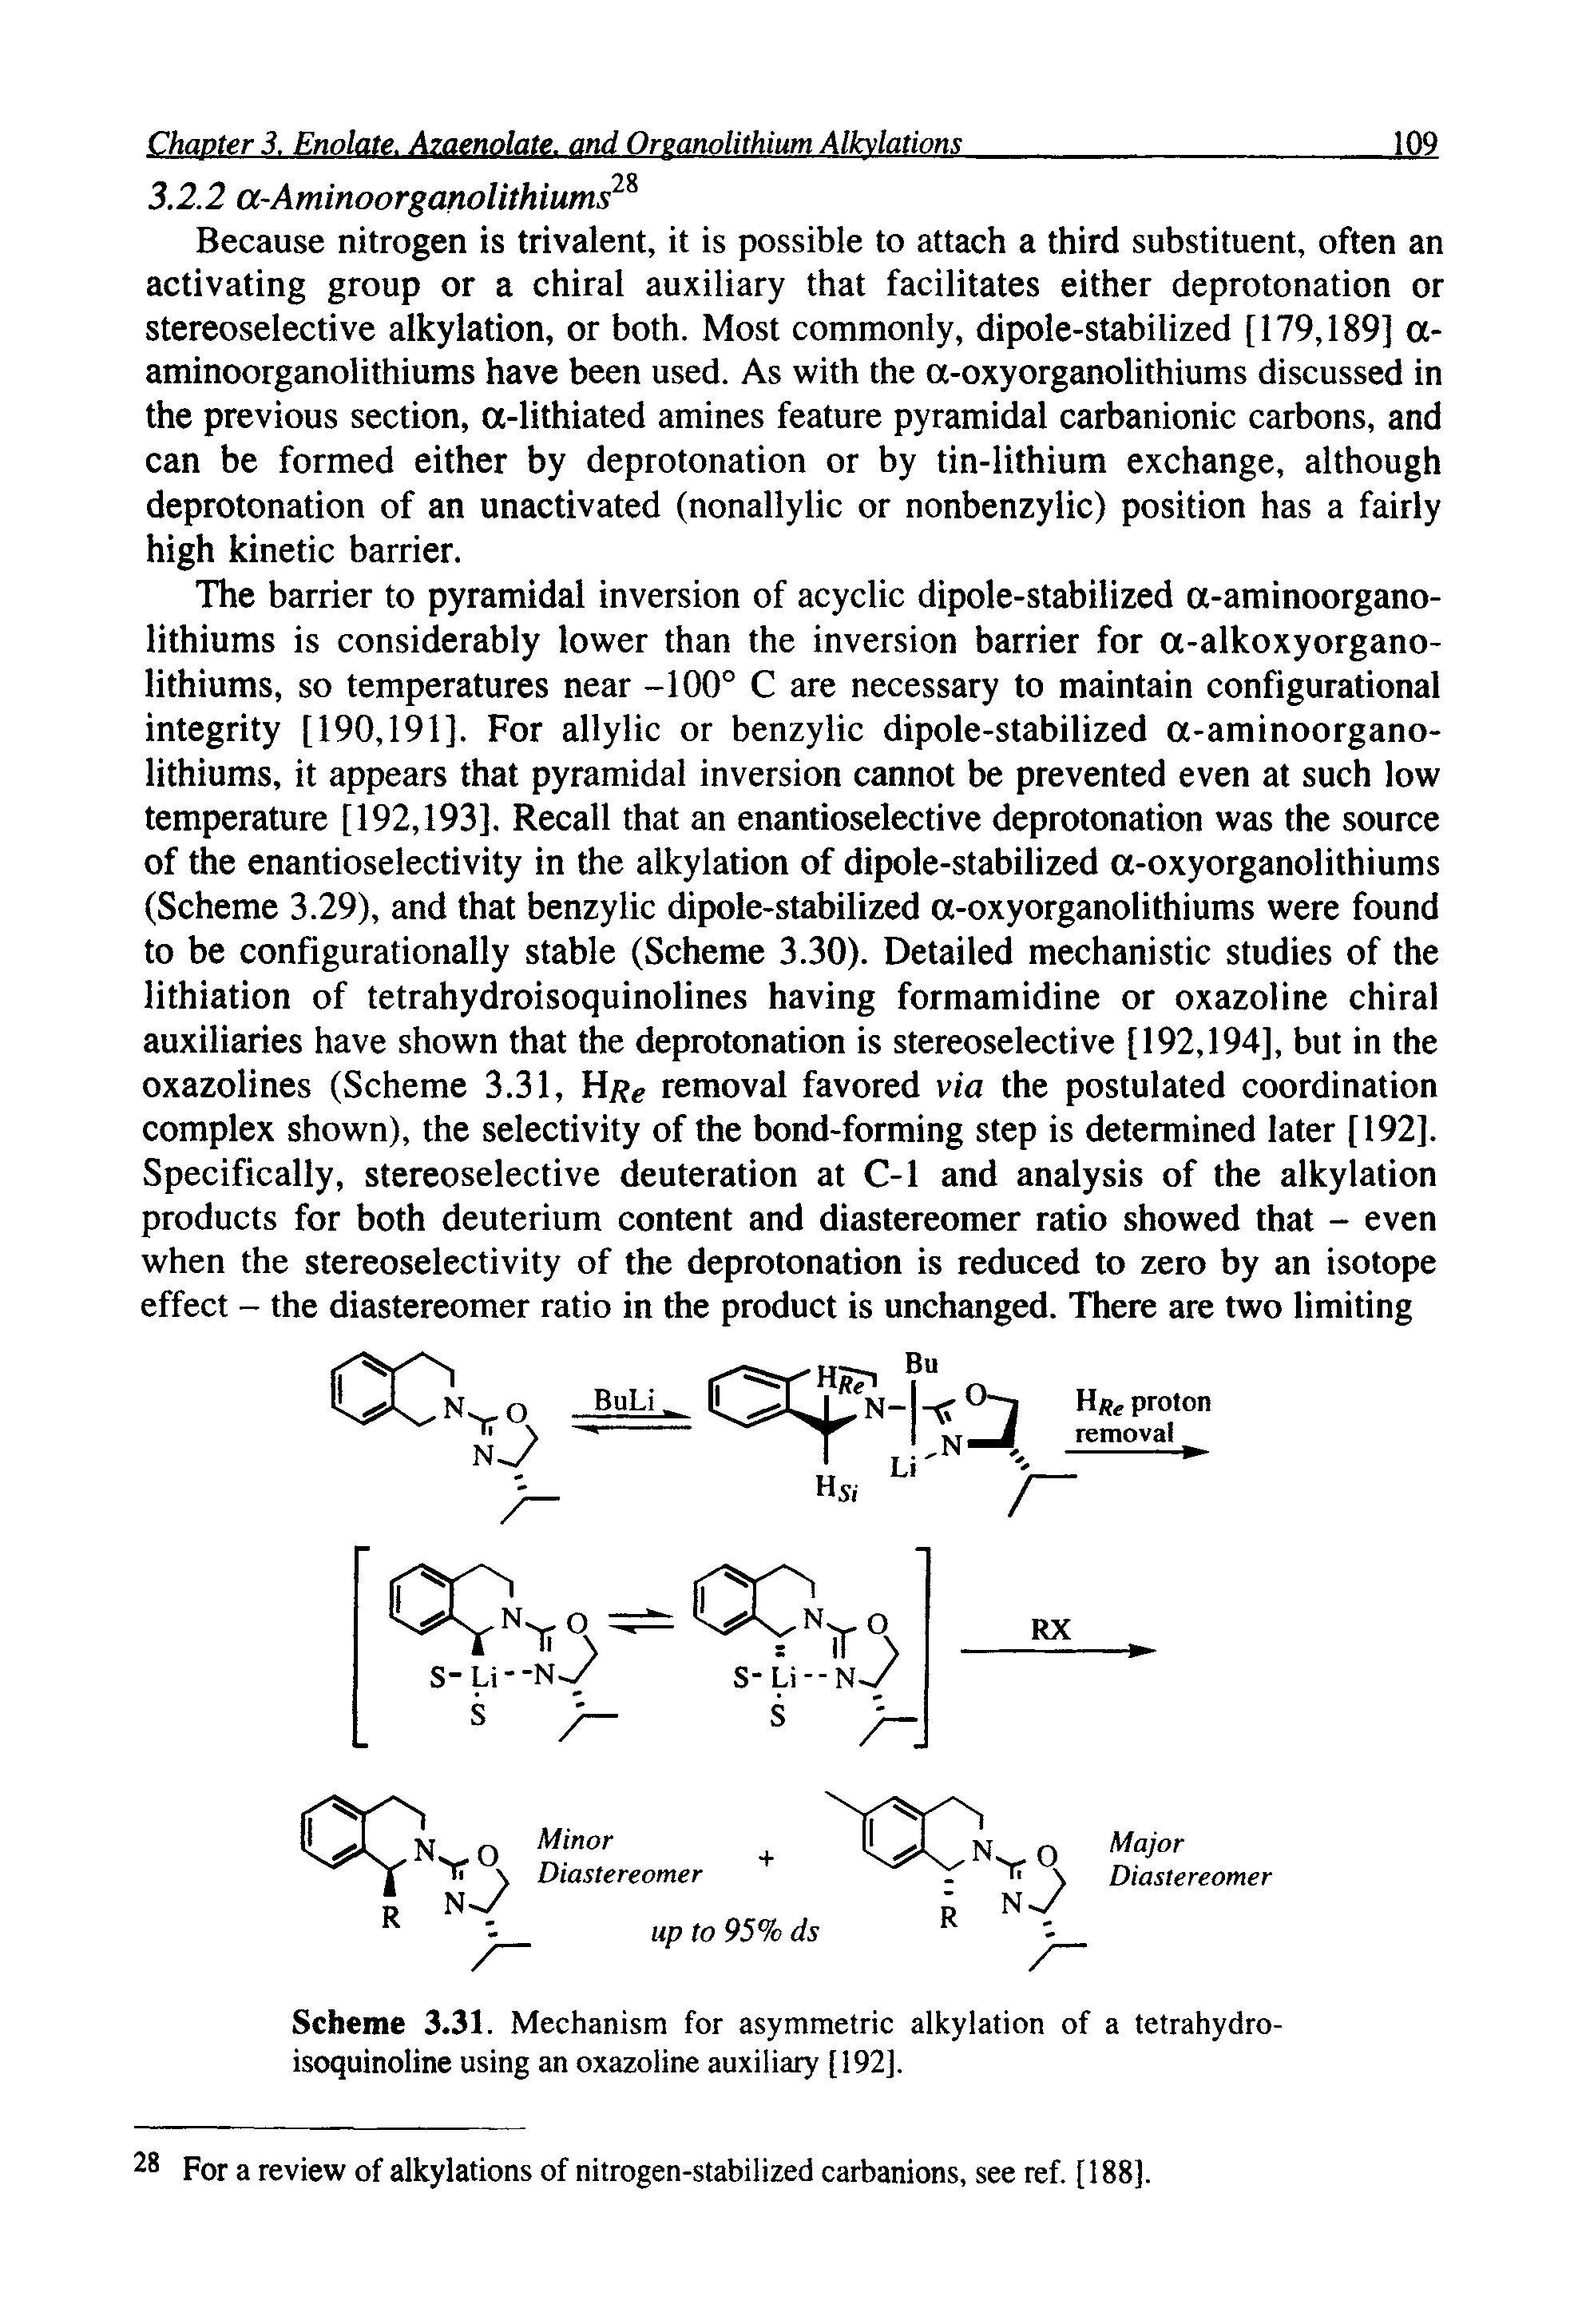 Scheme 3.31. Mechanism for asymmetric alkylation of a tetrahydro-isoquinoline using an oxazoline auxiliary [192].